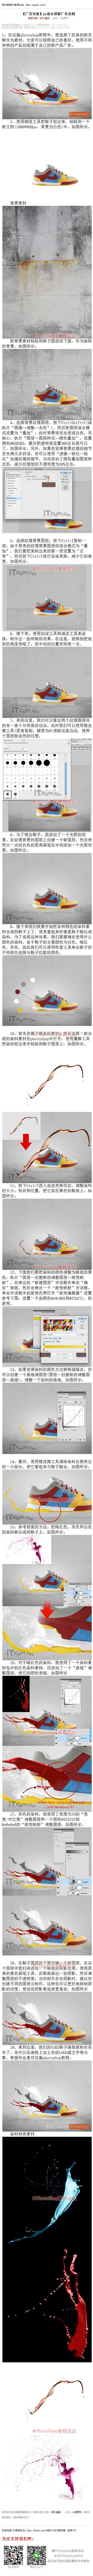 《ps设计球鞋广告实例》 PhotoSh...